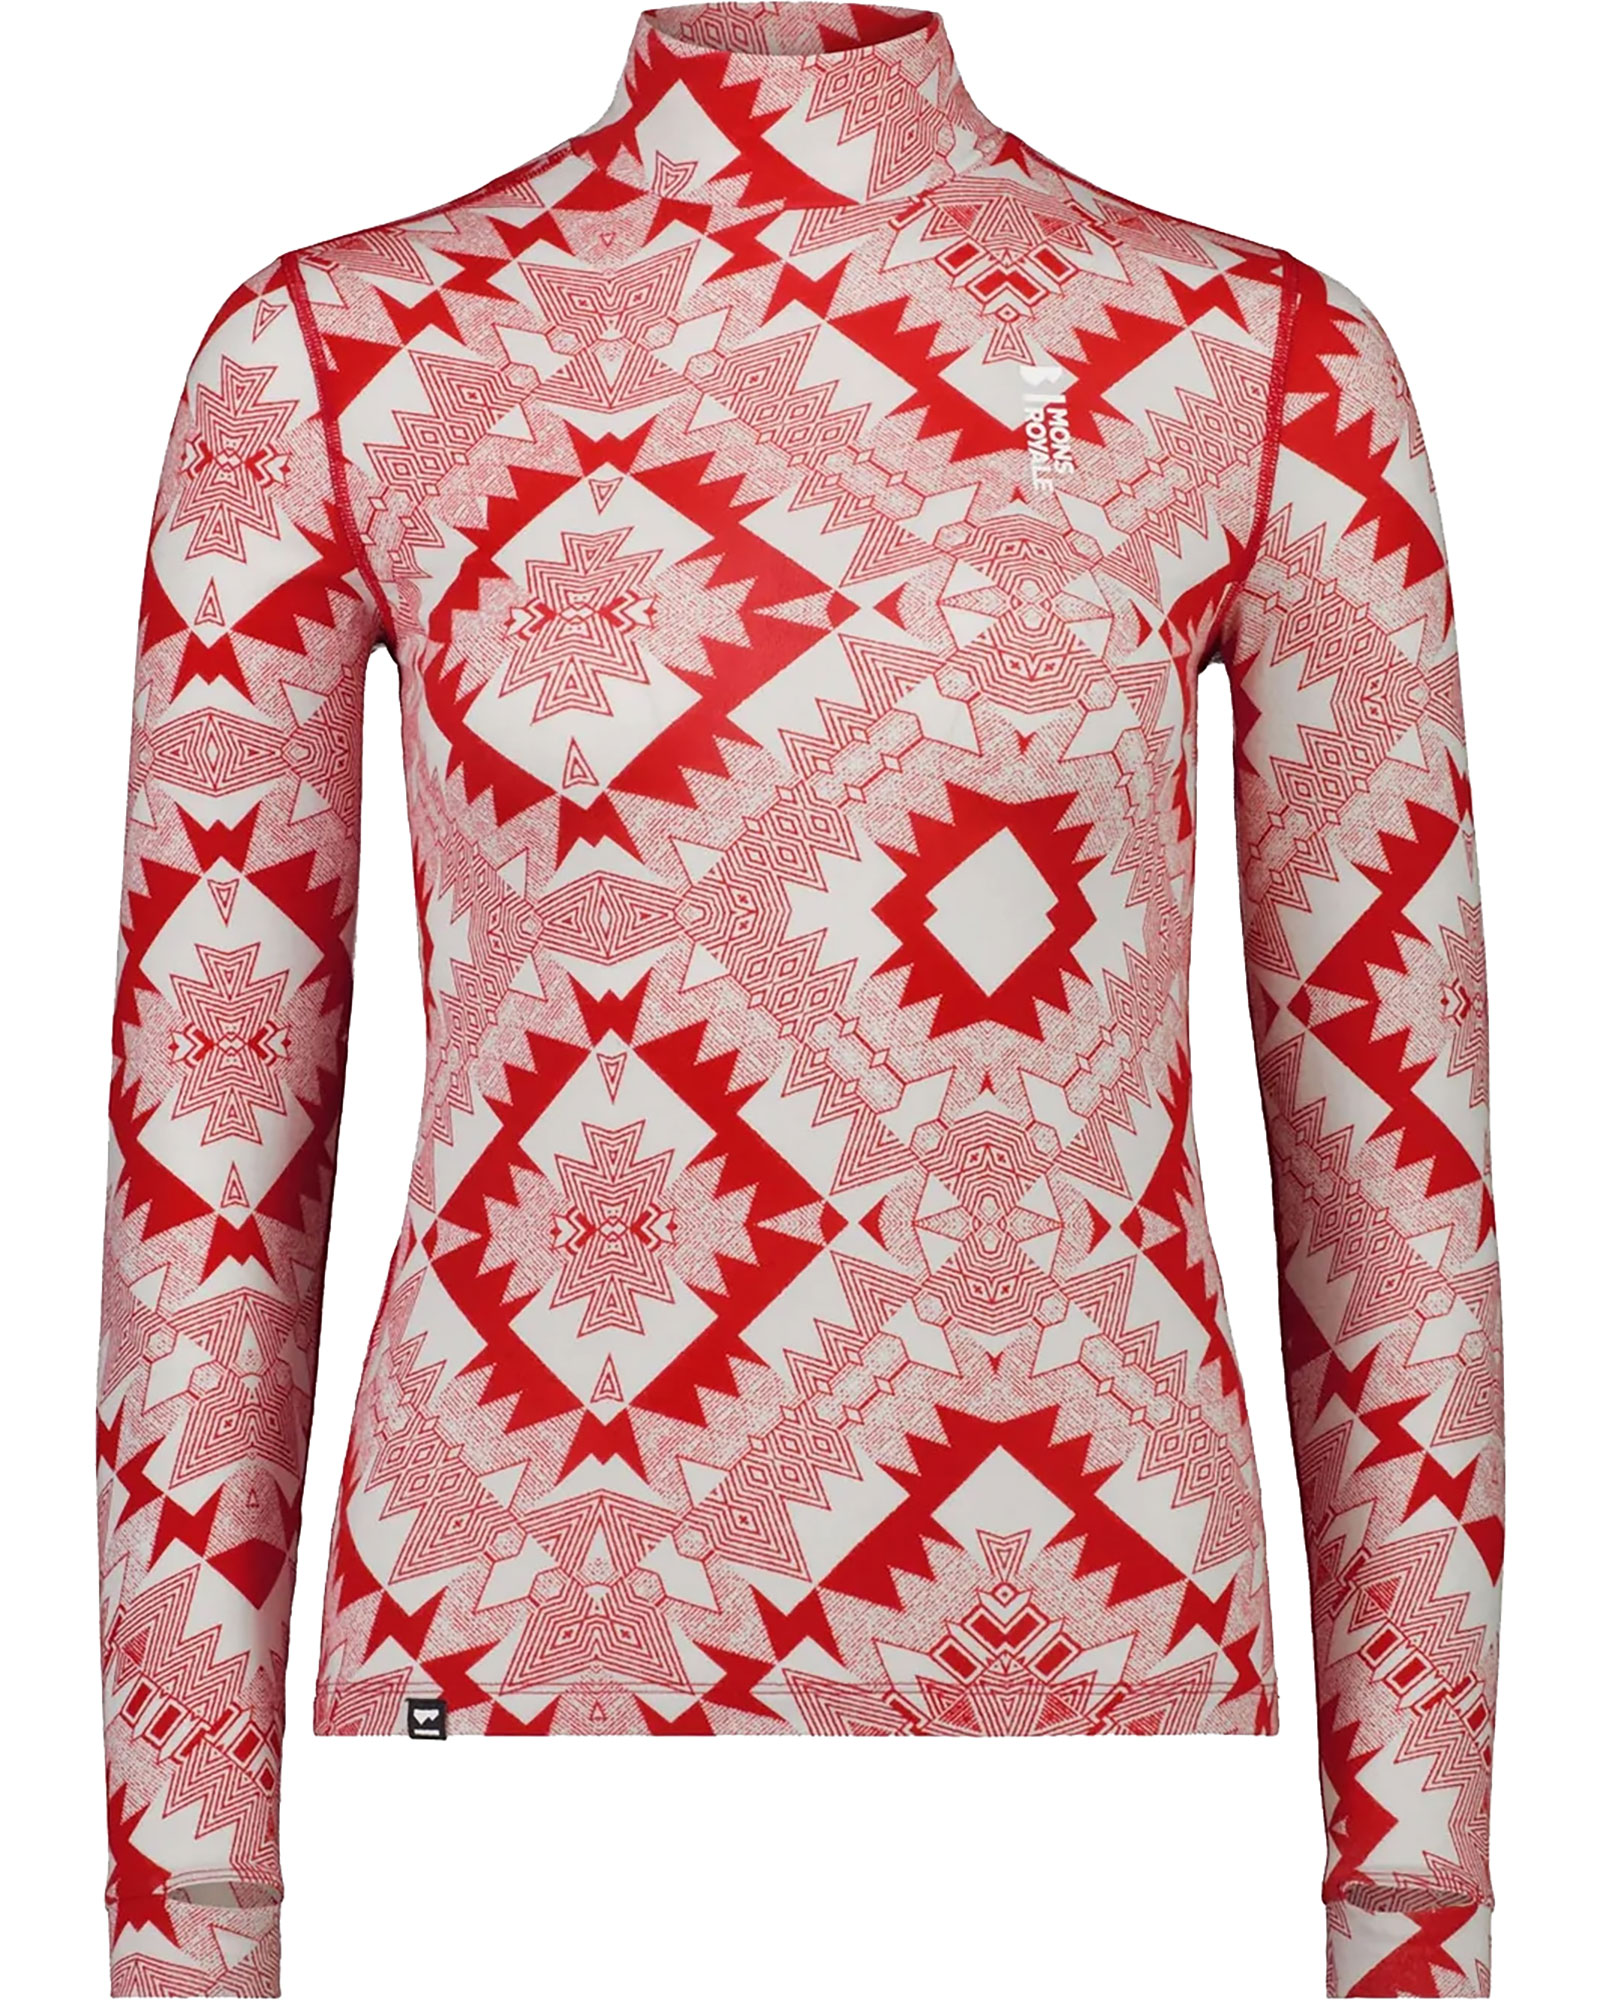 Mons Royale Cascade Merino Flex 200 Mock Neck Women’s Long Sleeve T Shirt - Retro Red Nordtek L